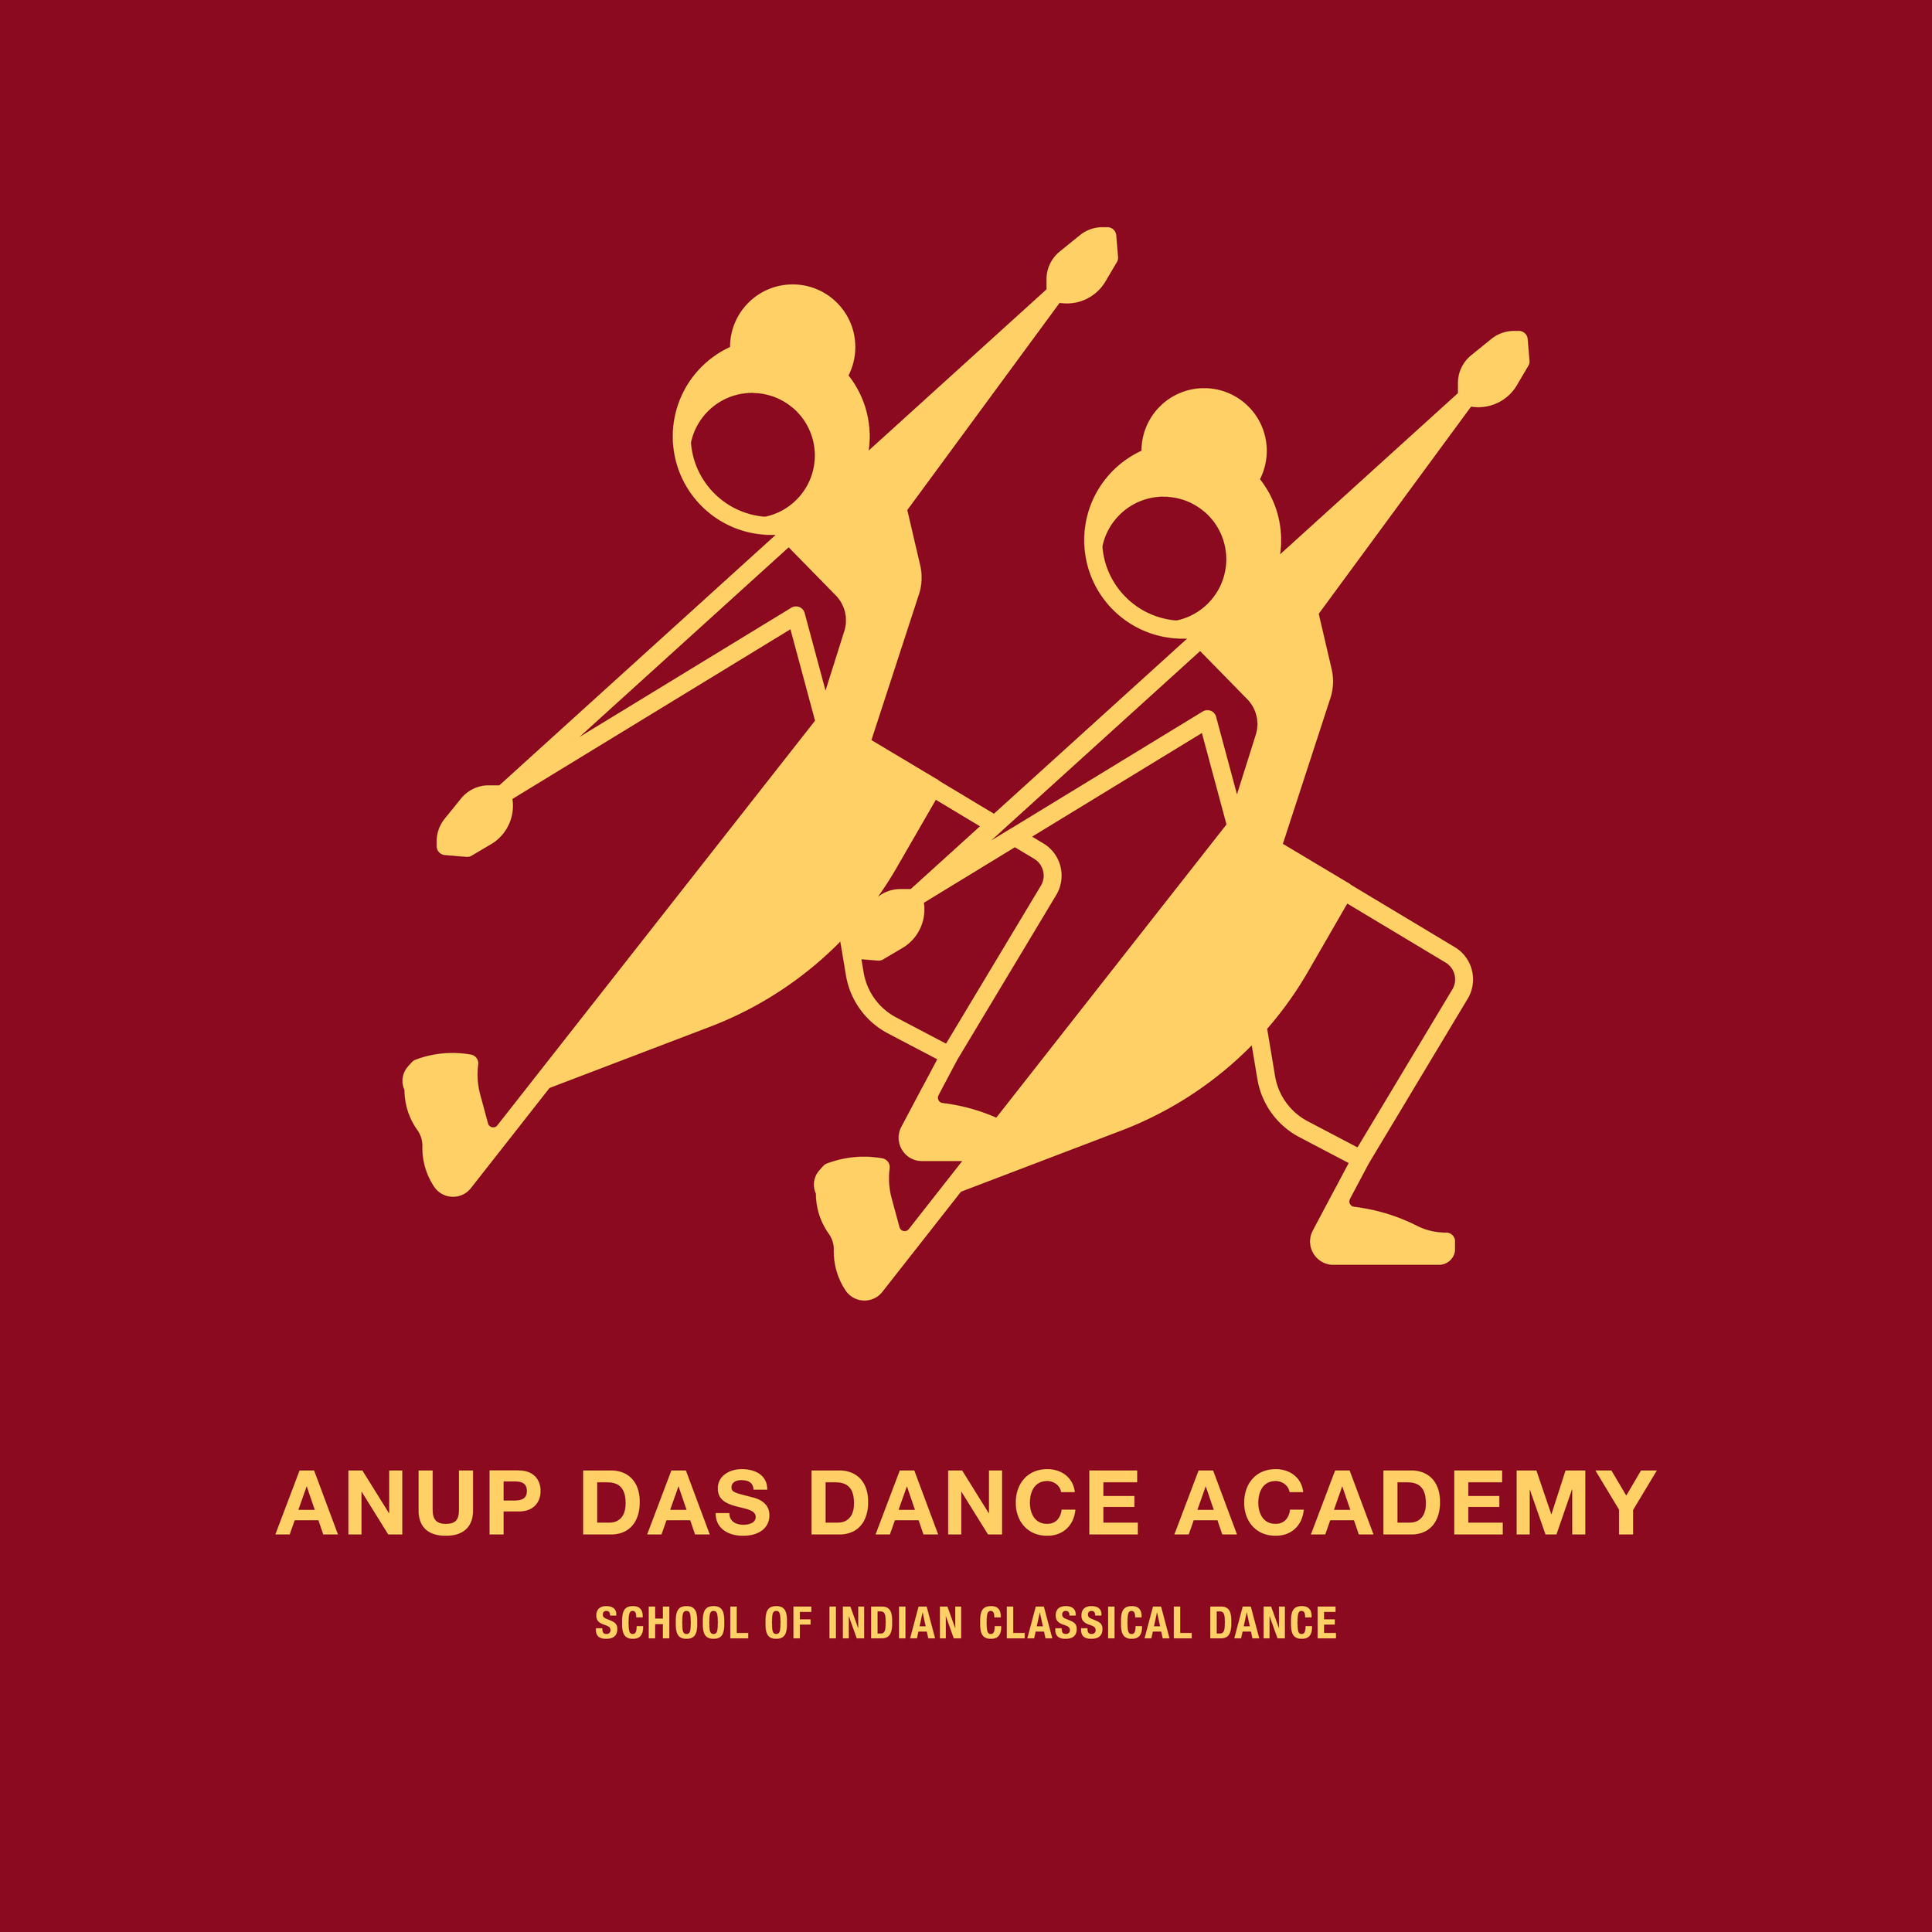 RG dance academy. The Movement of Art. - YouTube